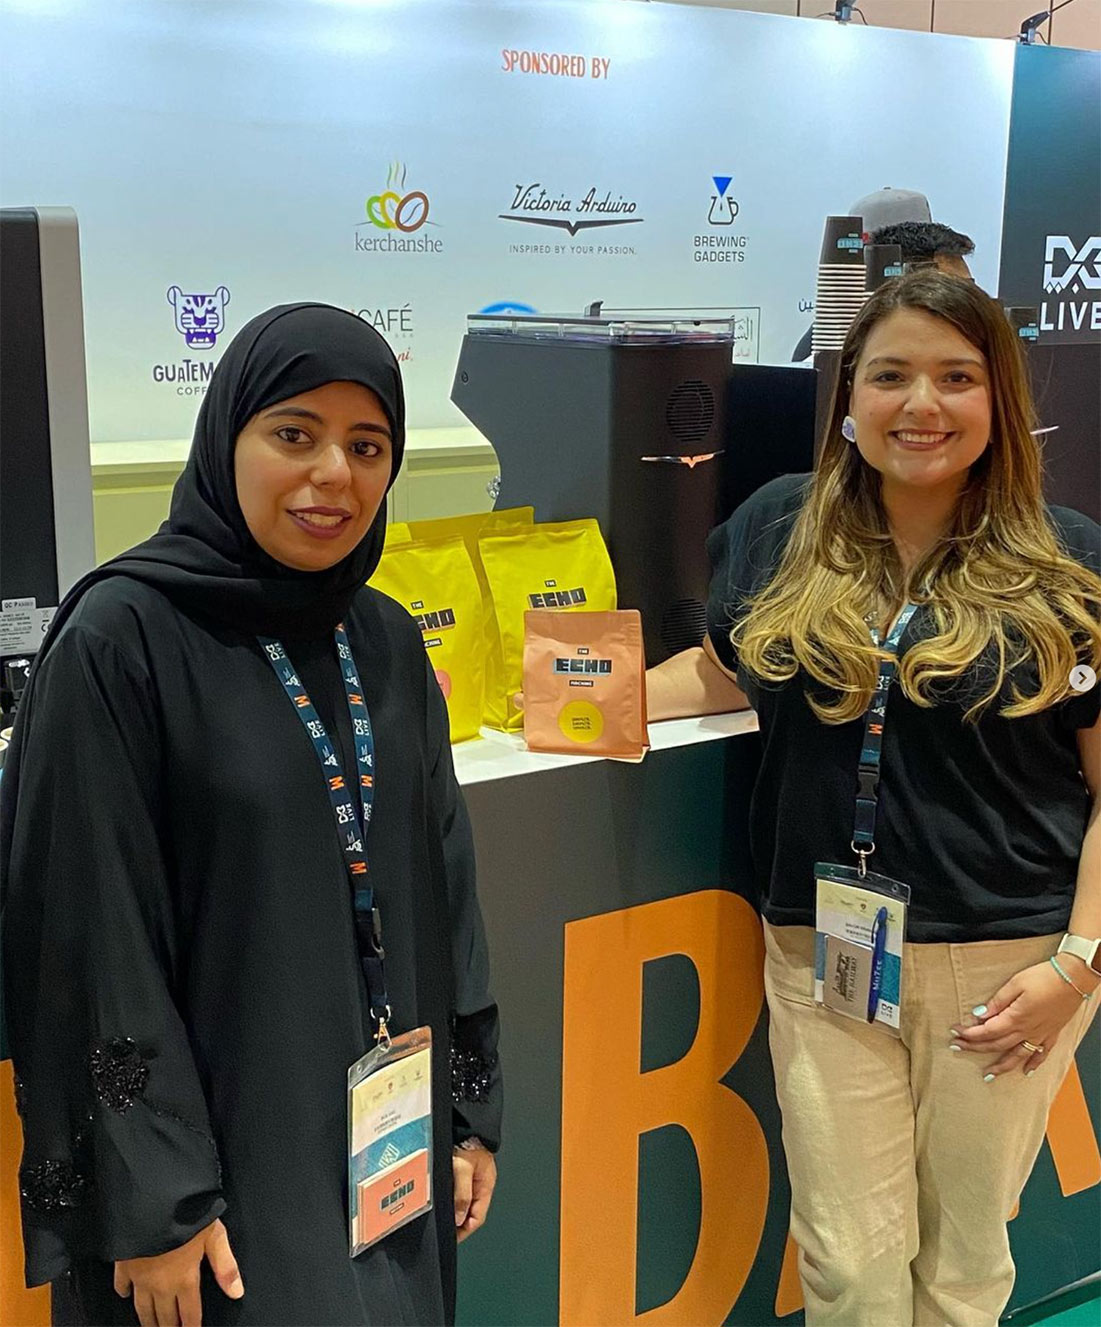 Interview with Asma AlSuwaidi, owner of The Echo Machine located in Abu Dhabi, UAE